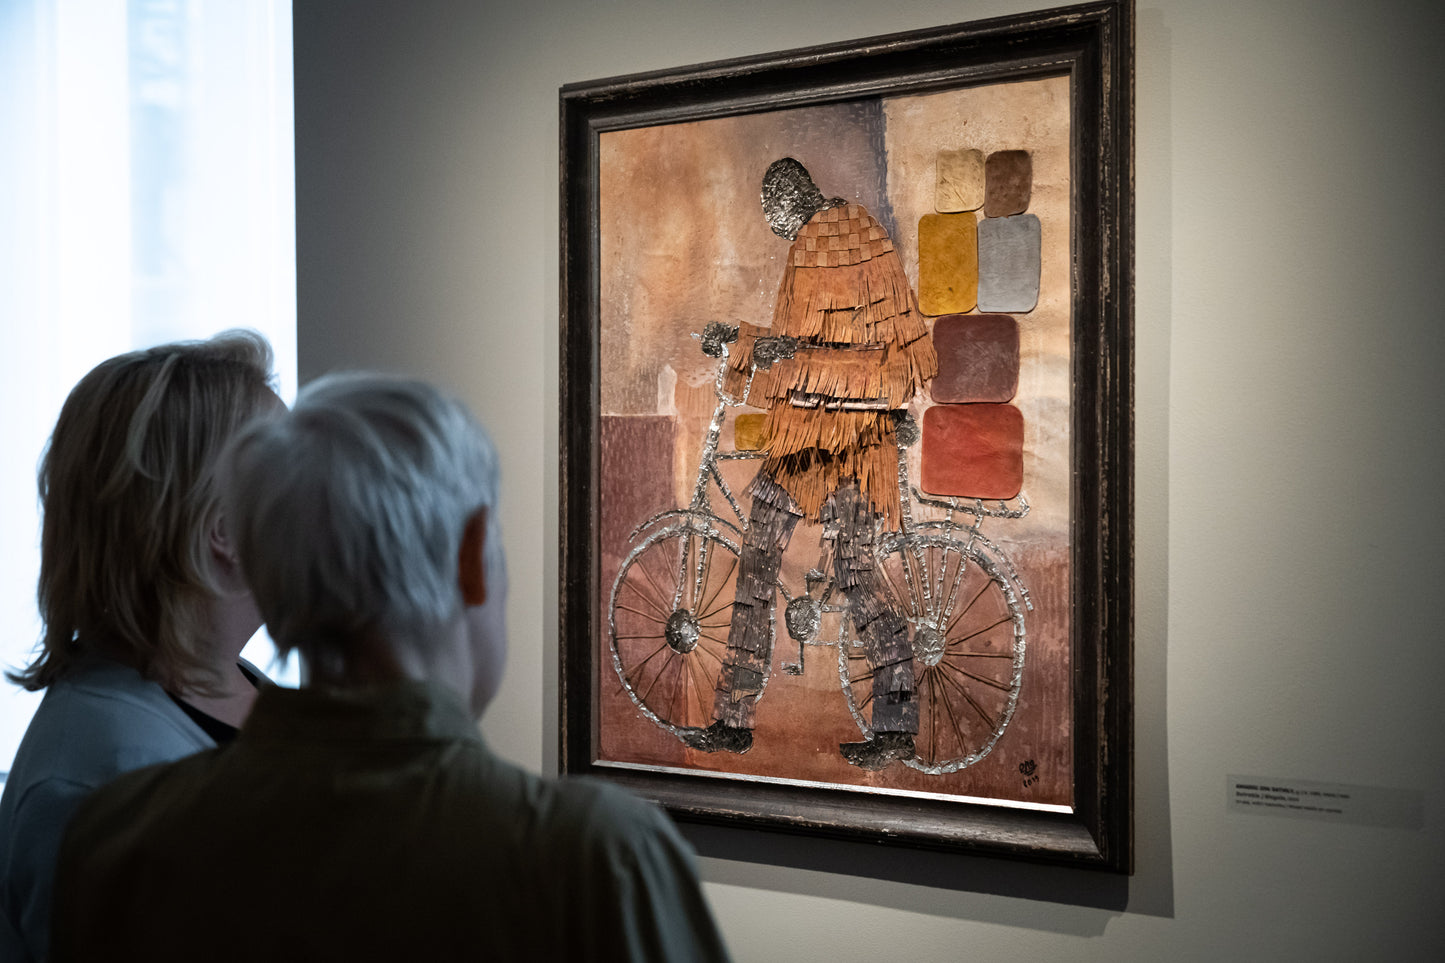 AMADOU OPA BATHILY (Mali) | Bicycle, 2019 | Mixed media, canvas, 90x80 (100x90)